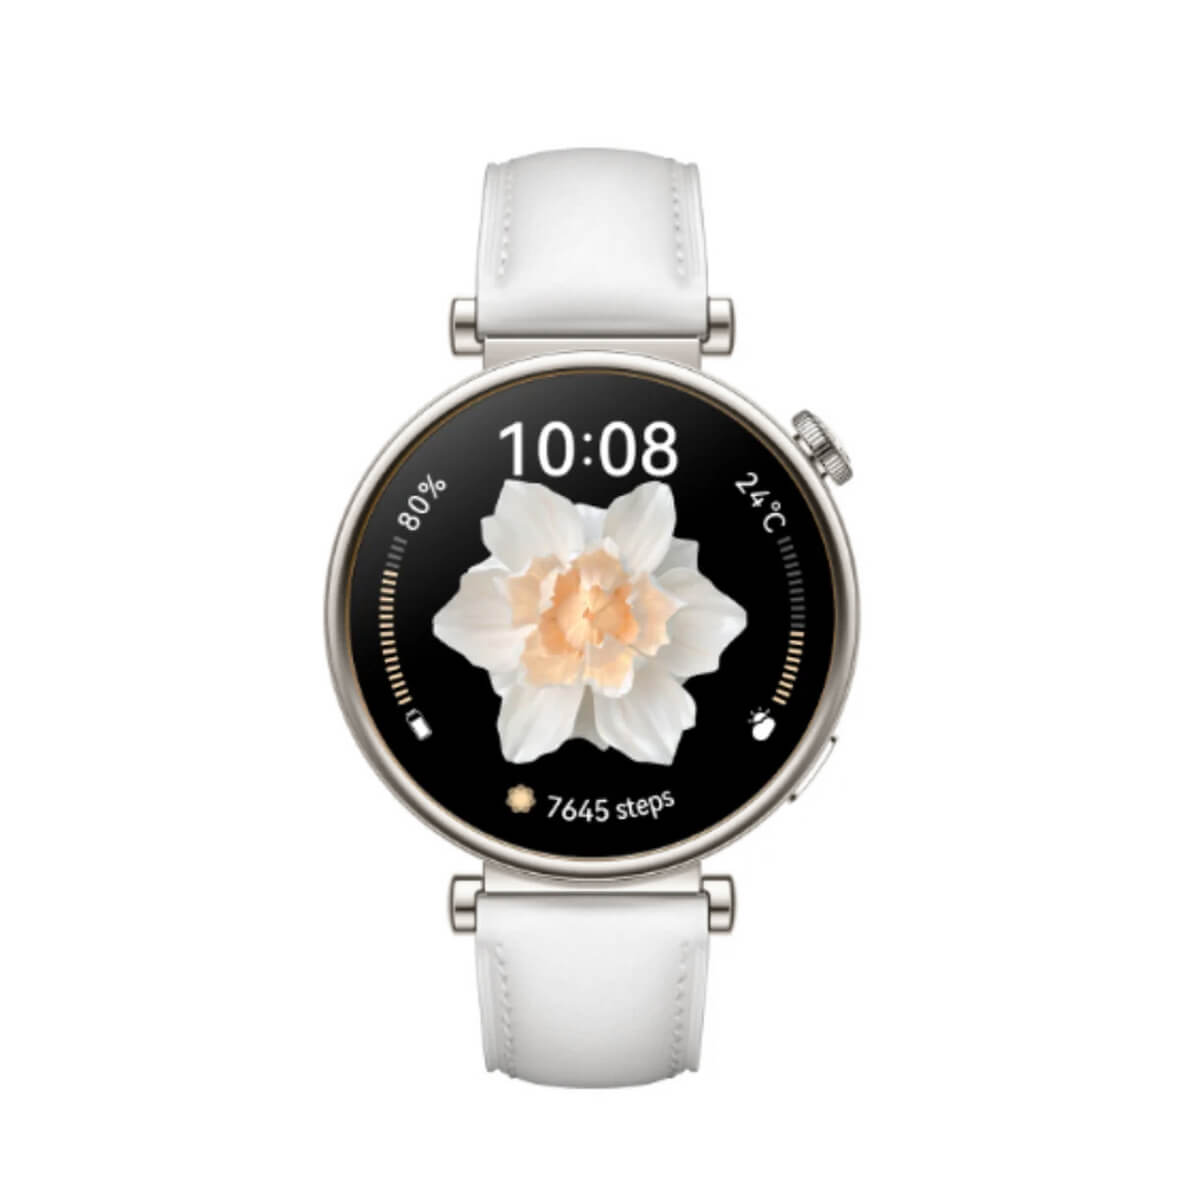 Hommtel GT4 Pro AMOLED Display Smartwatch - Silver